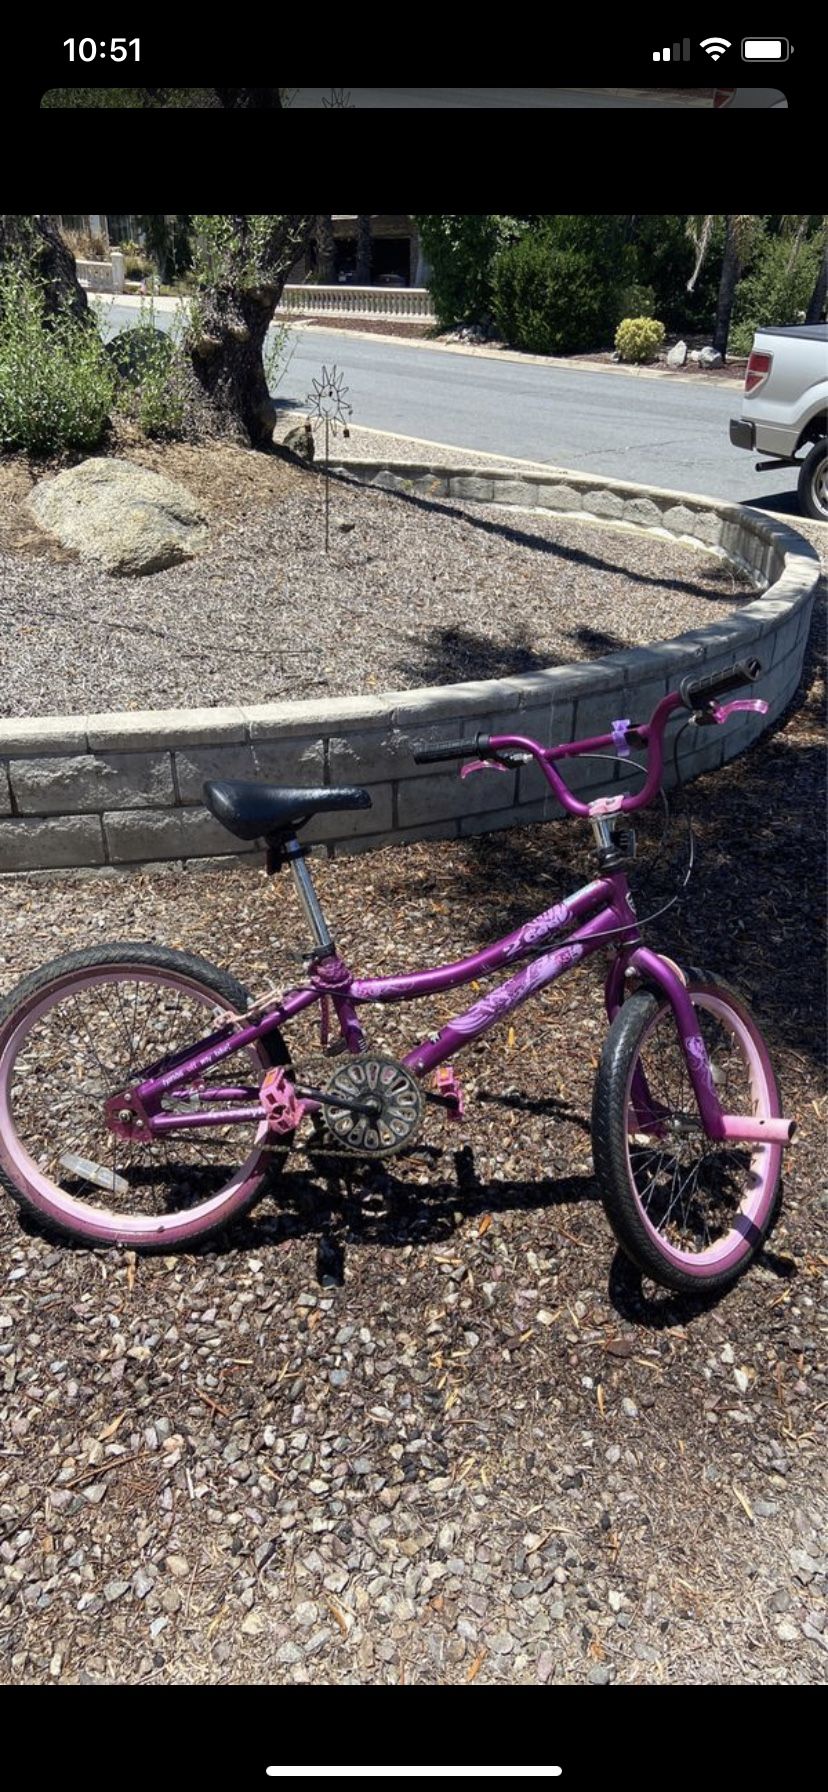 Kent 20" 2 Cool BMX Girl's Bike, Satin Purple